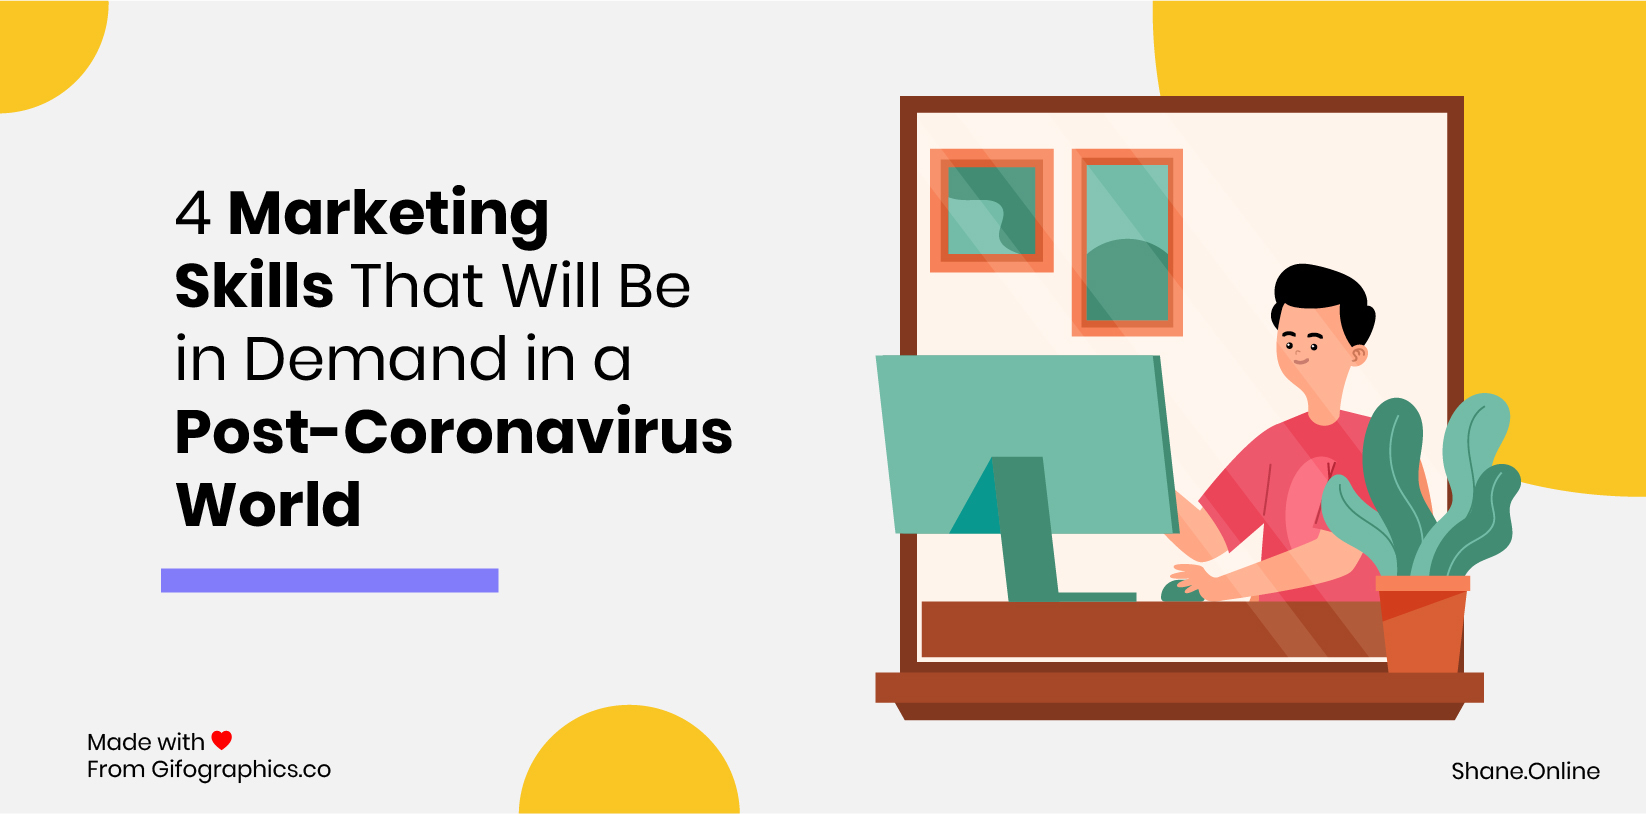 4 Marketing Skills That Will Be in Demand in a Post-Coronavirus World